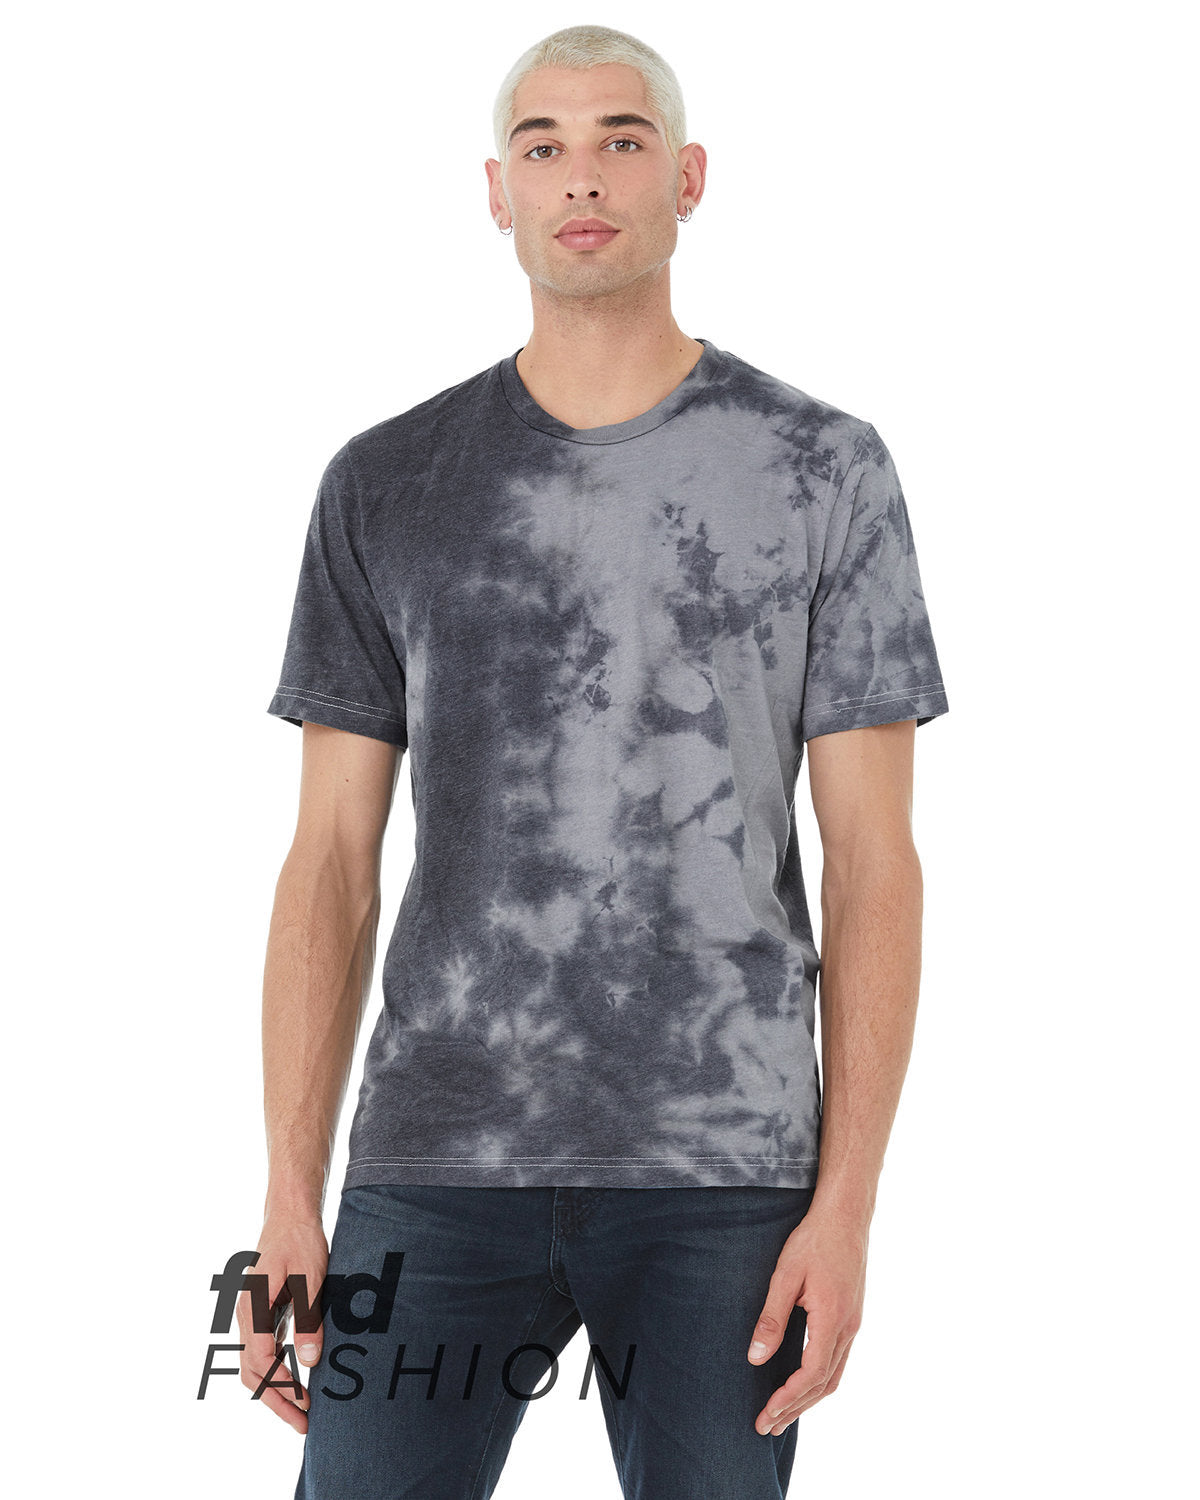 Bella Canvas Unisex Tie Dye T-Shirt Gray/Black